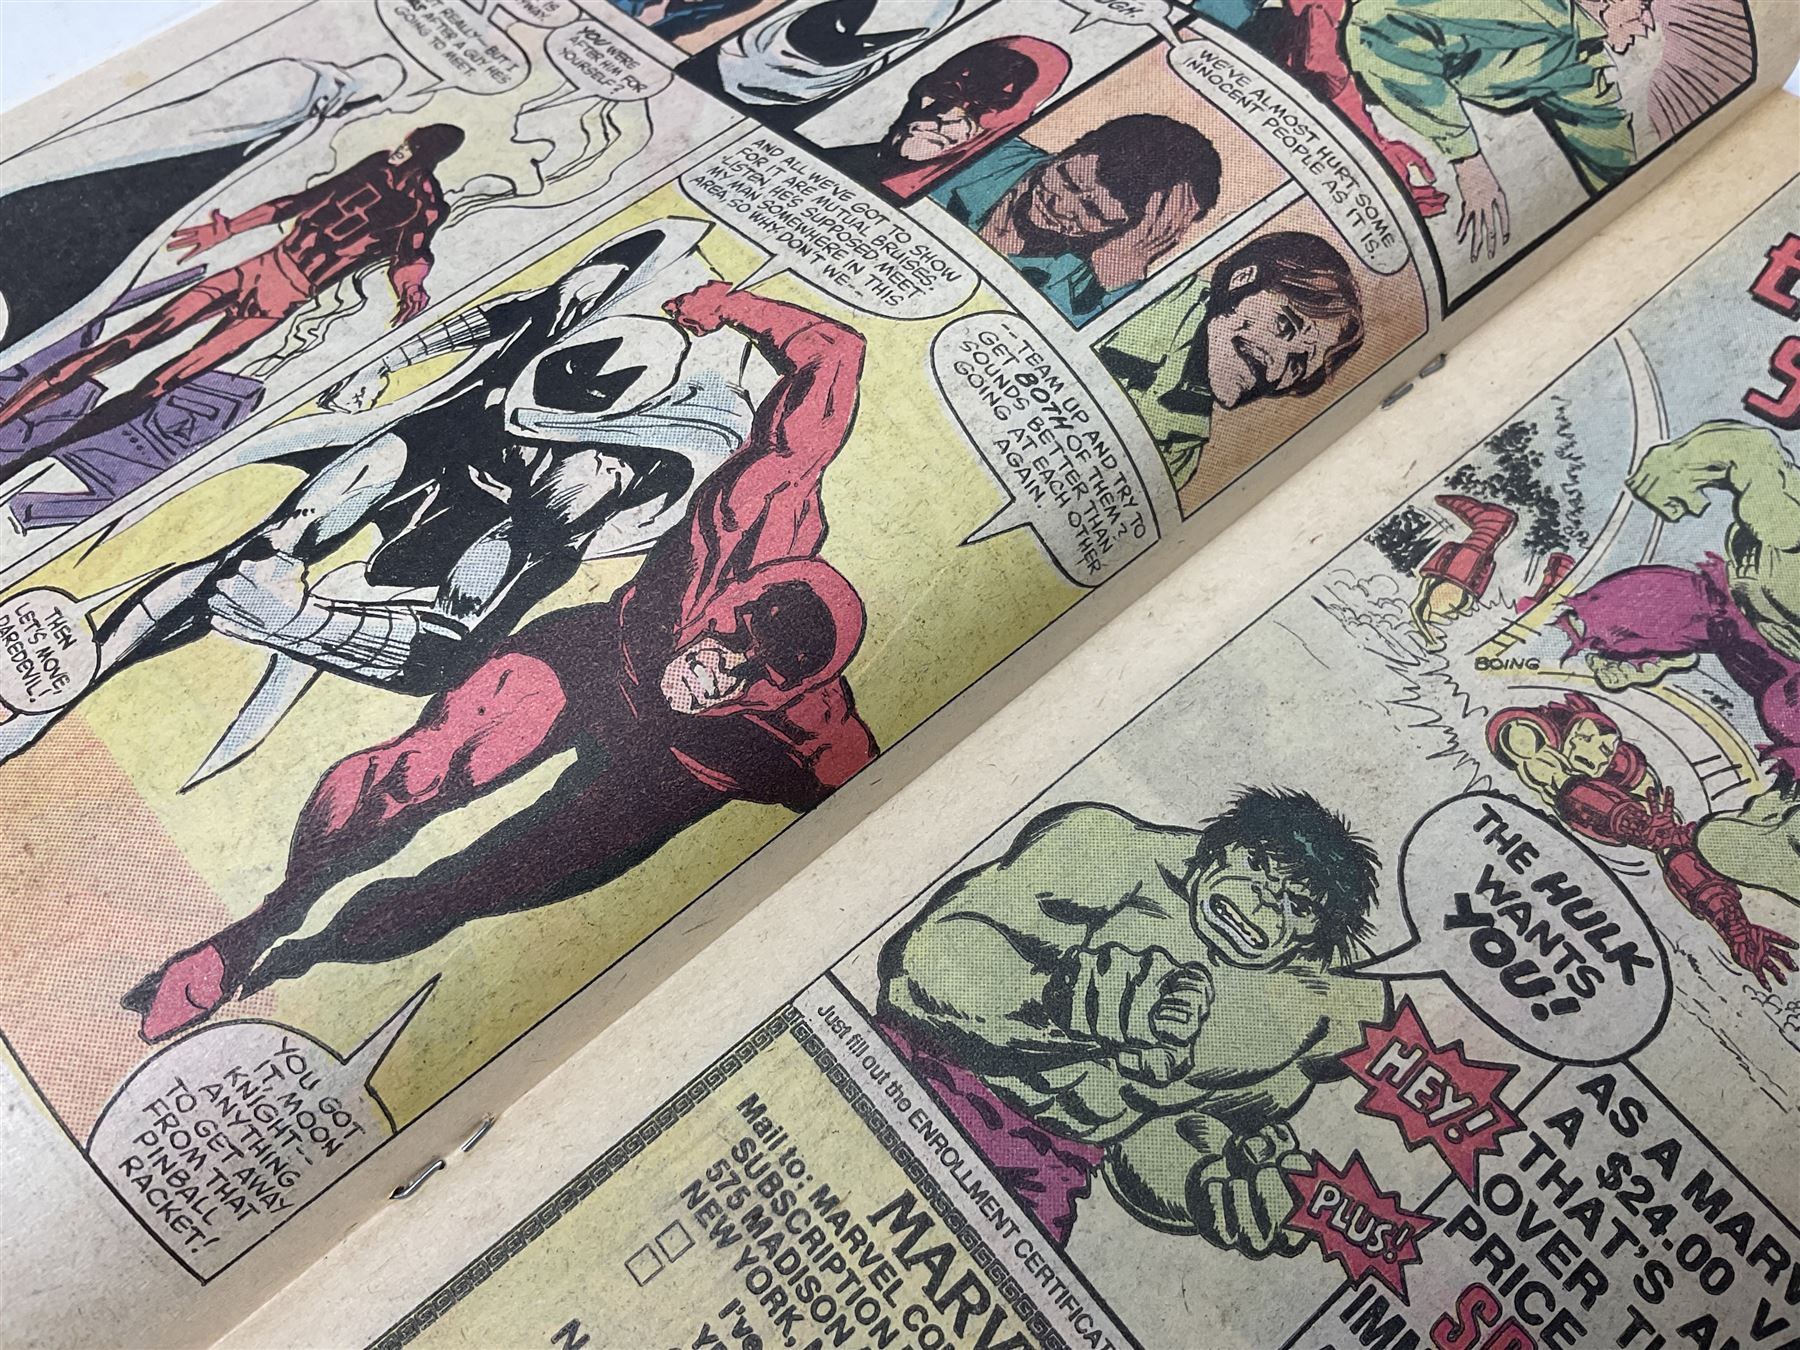 Moon Knight (1981-1982) Marvel comics. No. 13 - Image 3 of 11